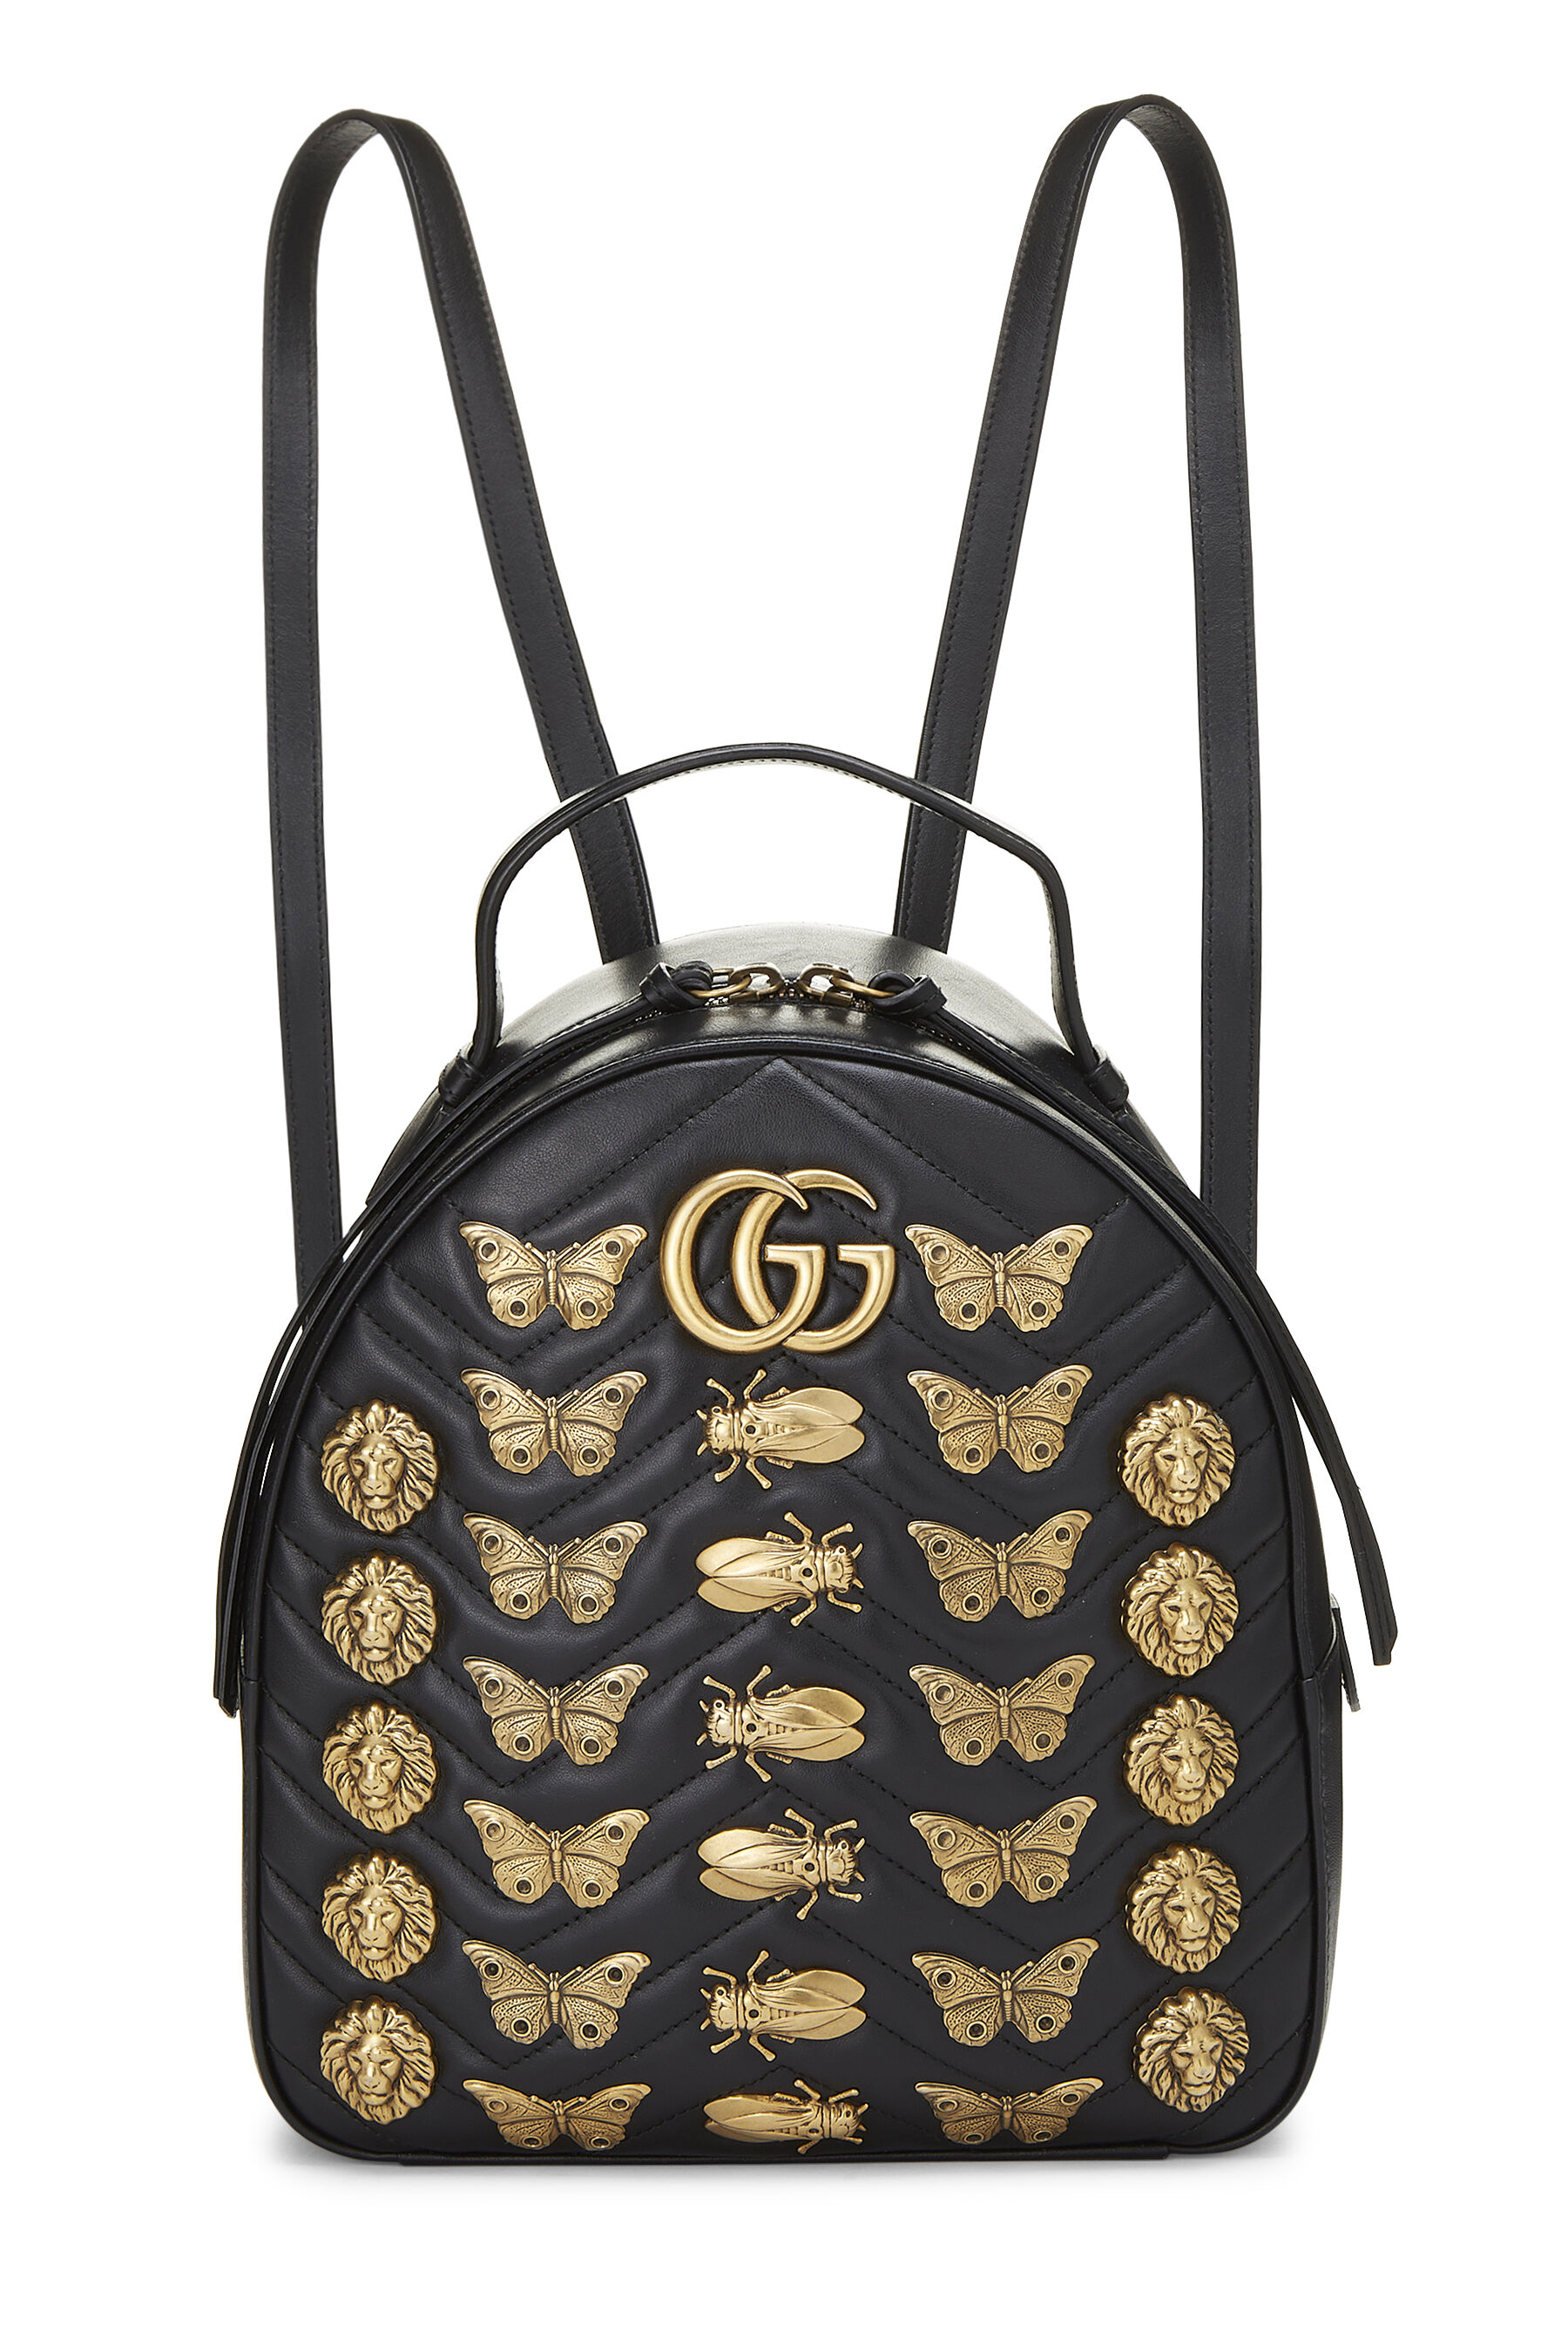 Gucci Leather Studded GG Backpack | WGACA